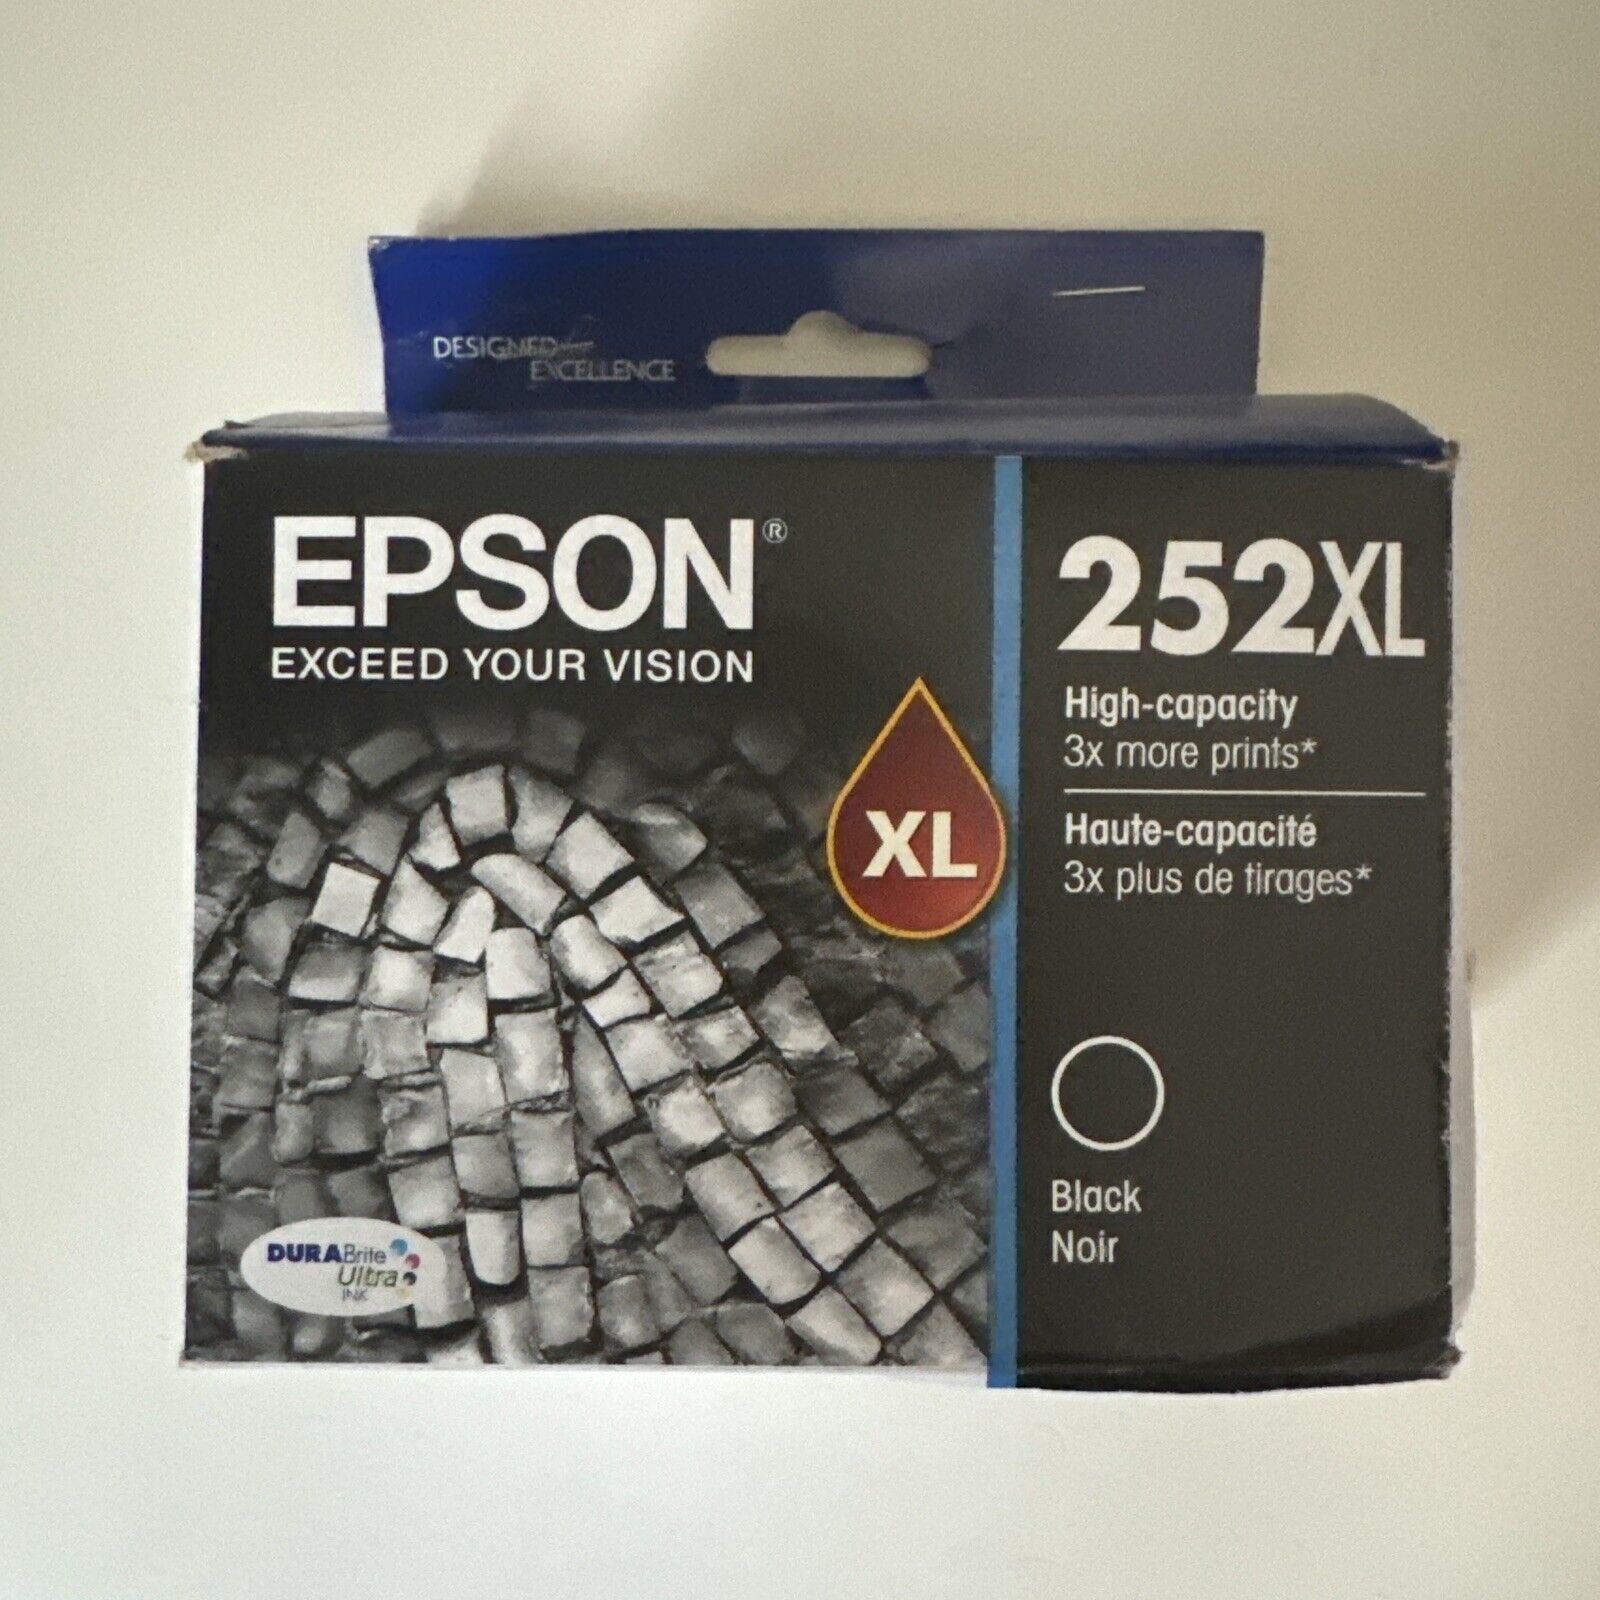 Epson 252XL Black High Yield Ink Genuine Brand New/Sealed 06/23